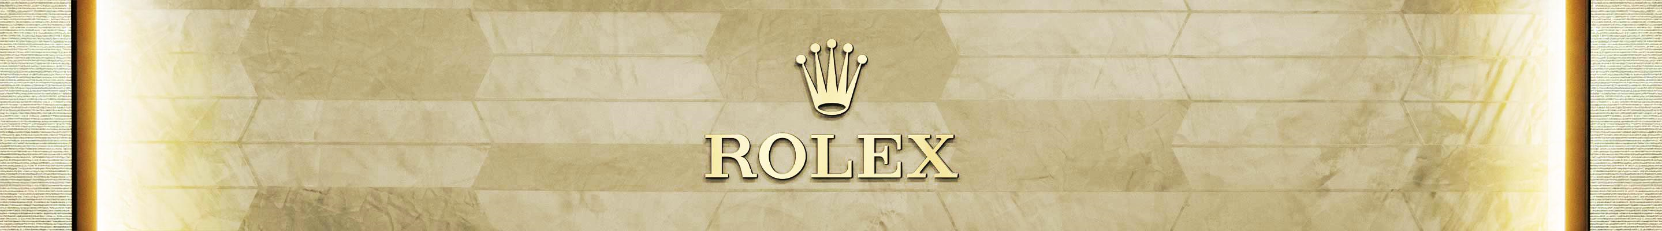 rolex-banner-desktop